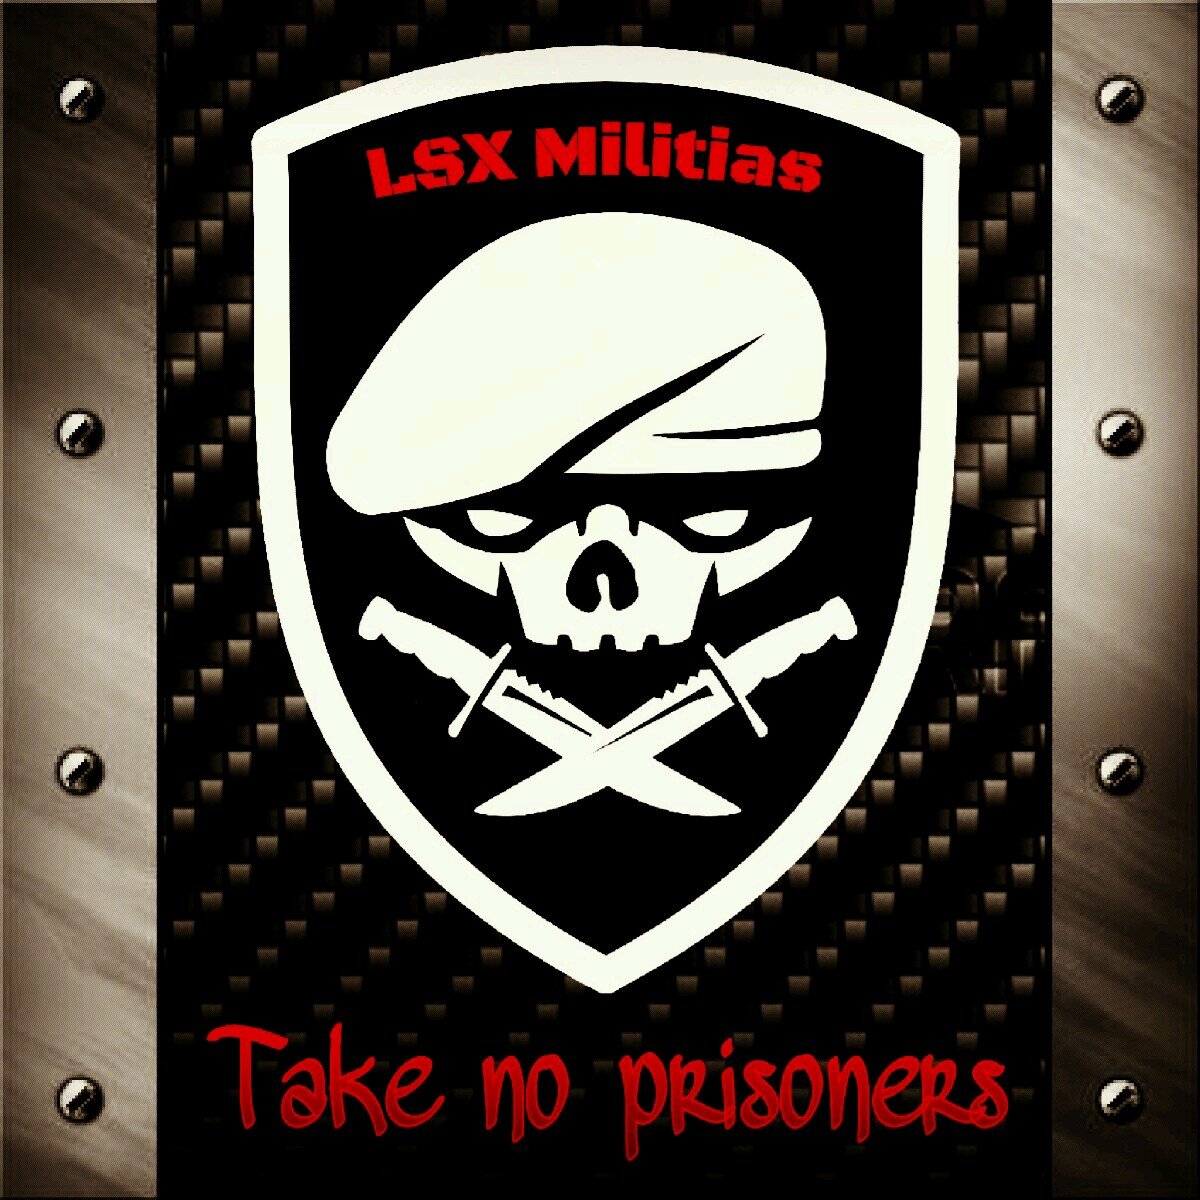 the Official Twitter account for LSX Militias